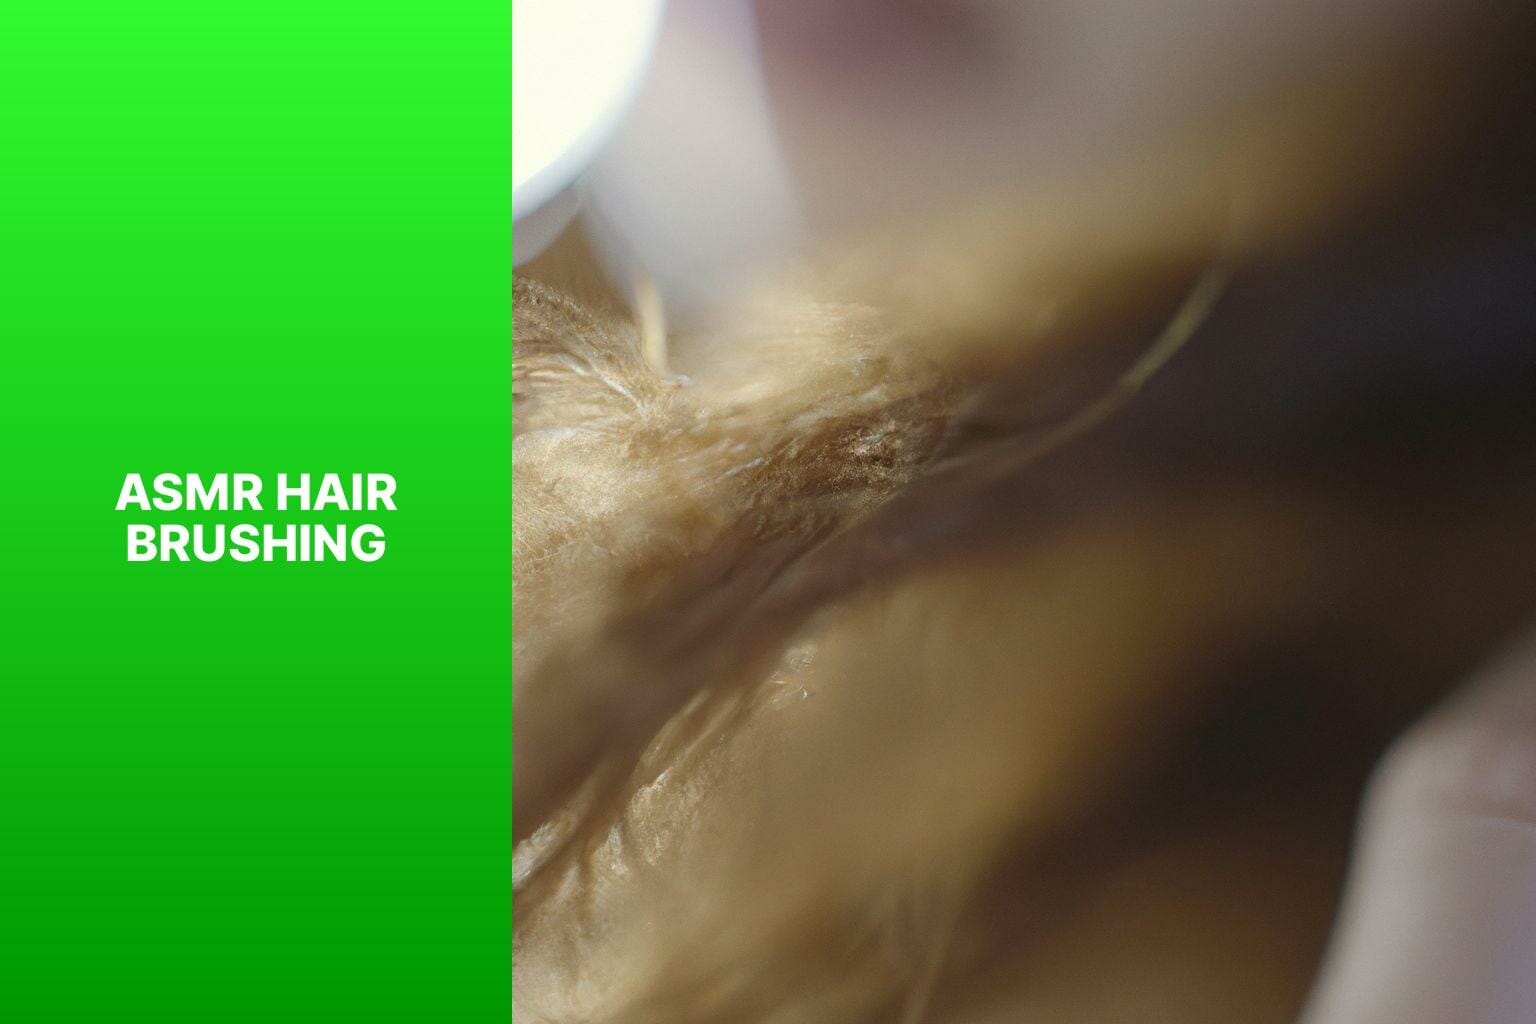 ASMR Hair Brushing with green background.